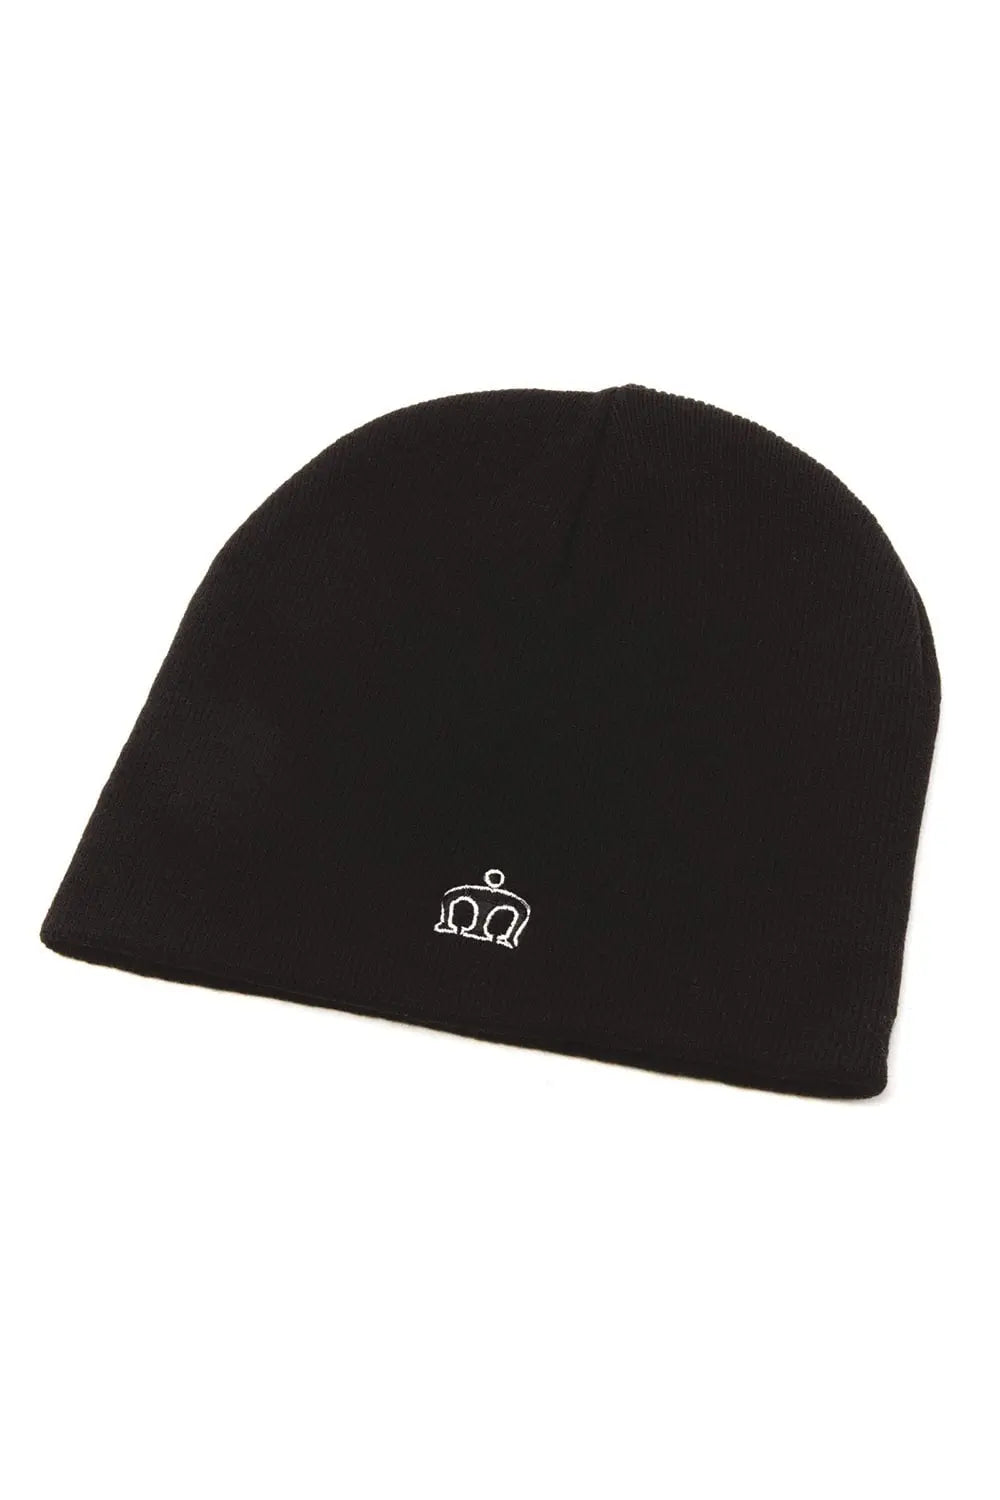 Merc London Collins Beanie Hat - Black From Woven Durham